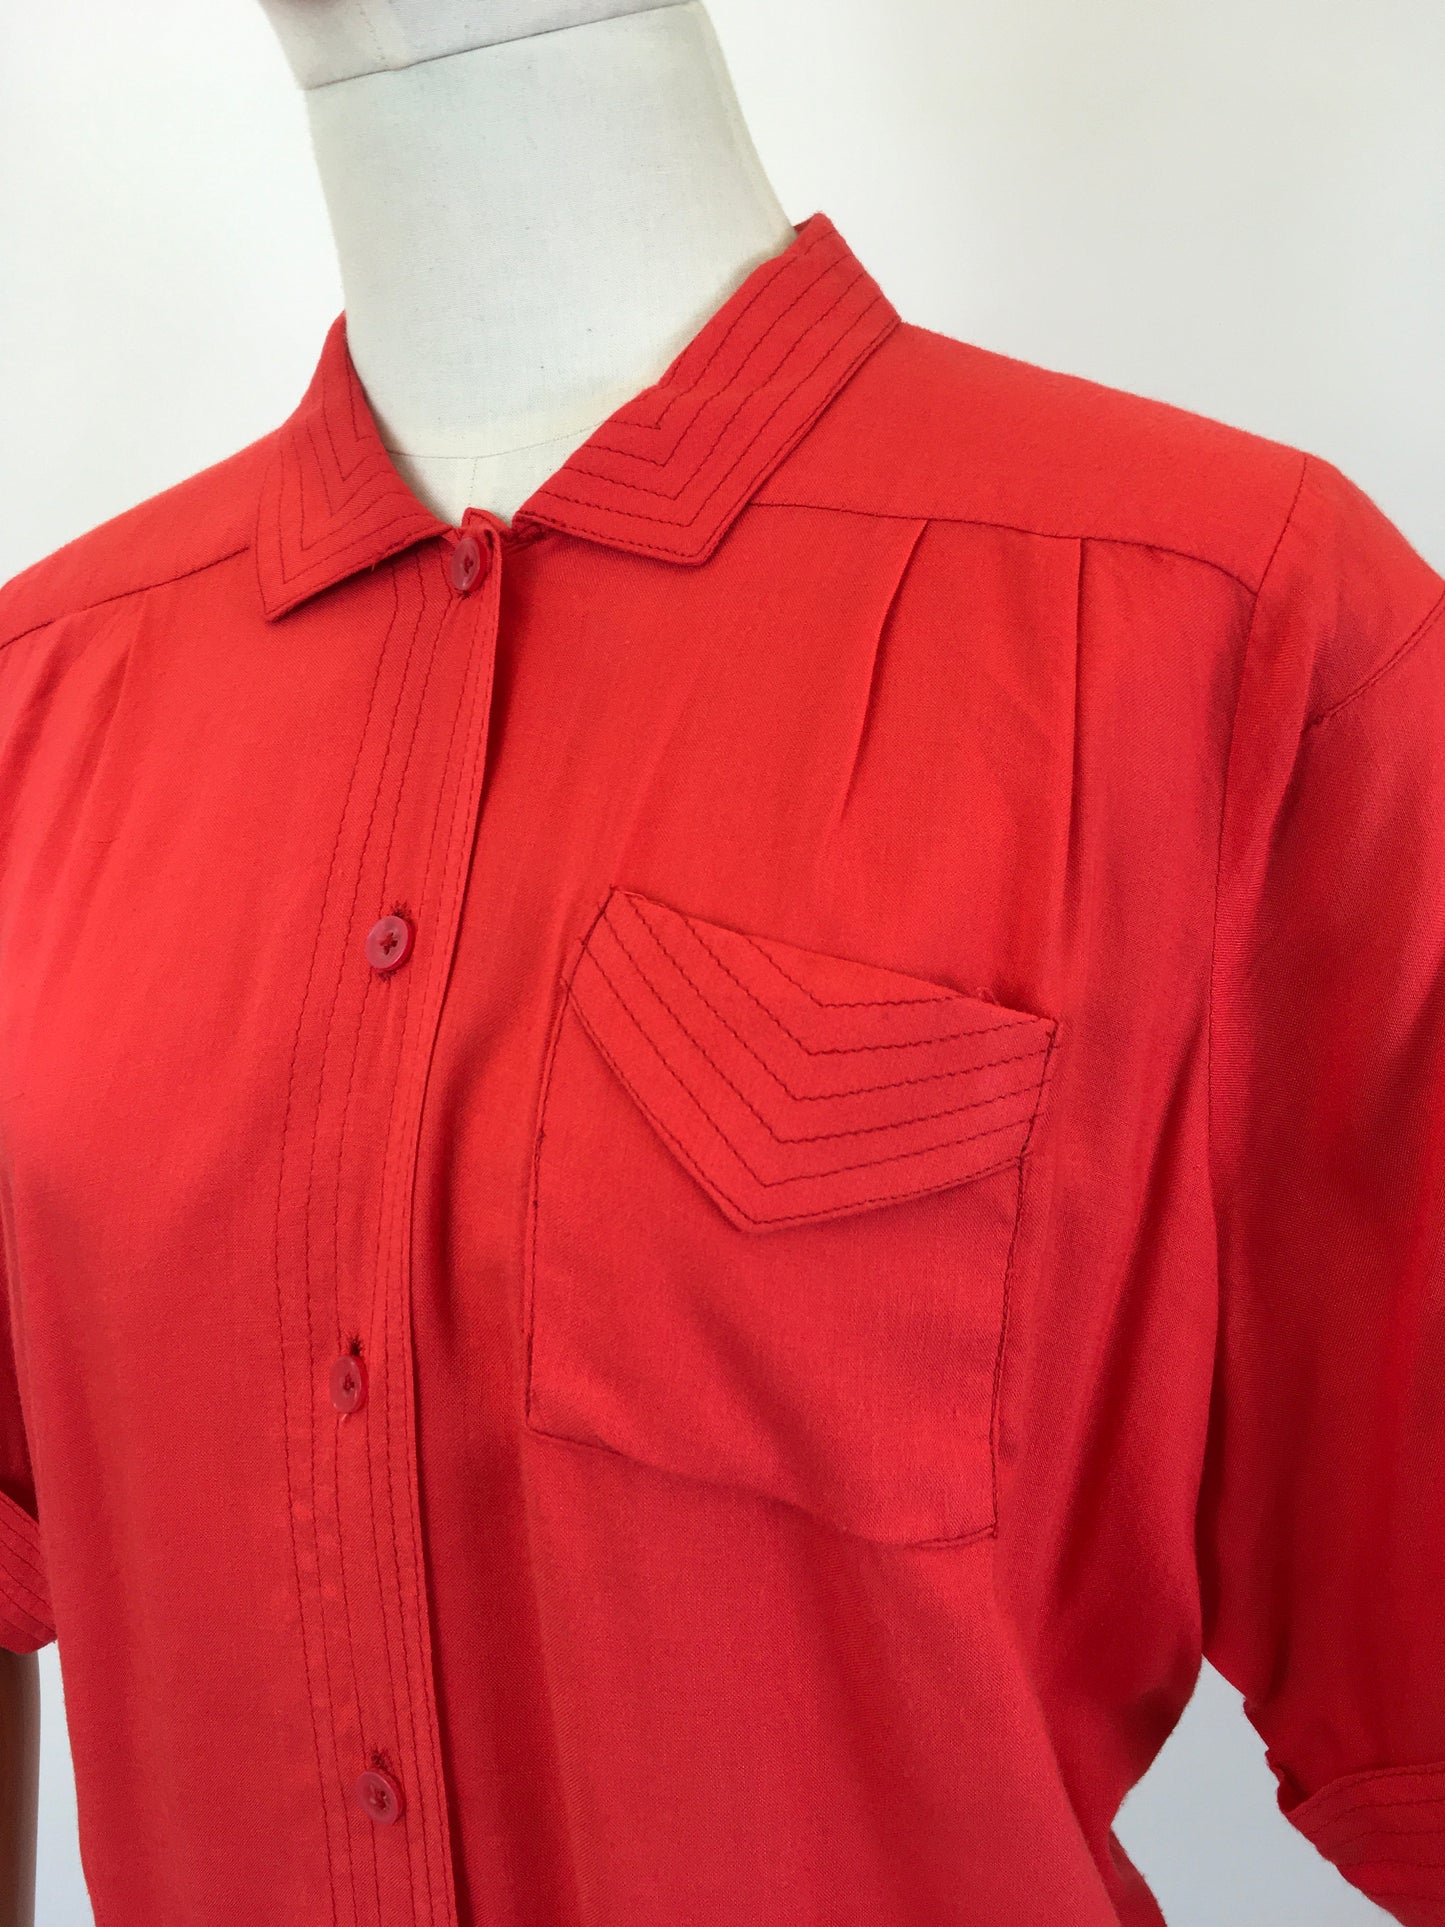 Original 1940's Fabulous Cotton Blouse - In A Lipstick Bright Red